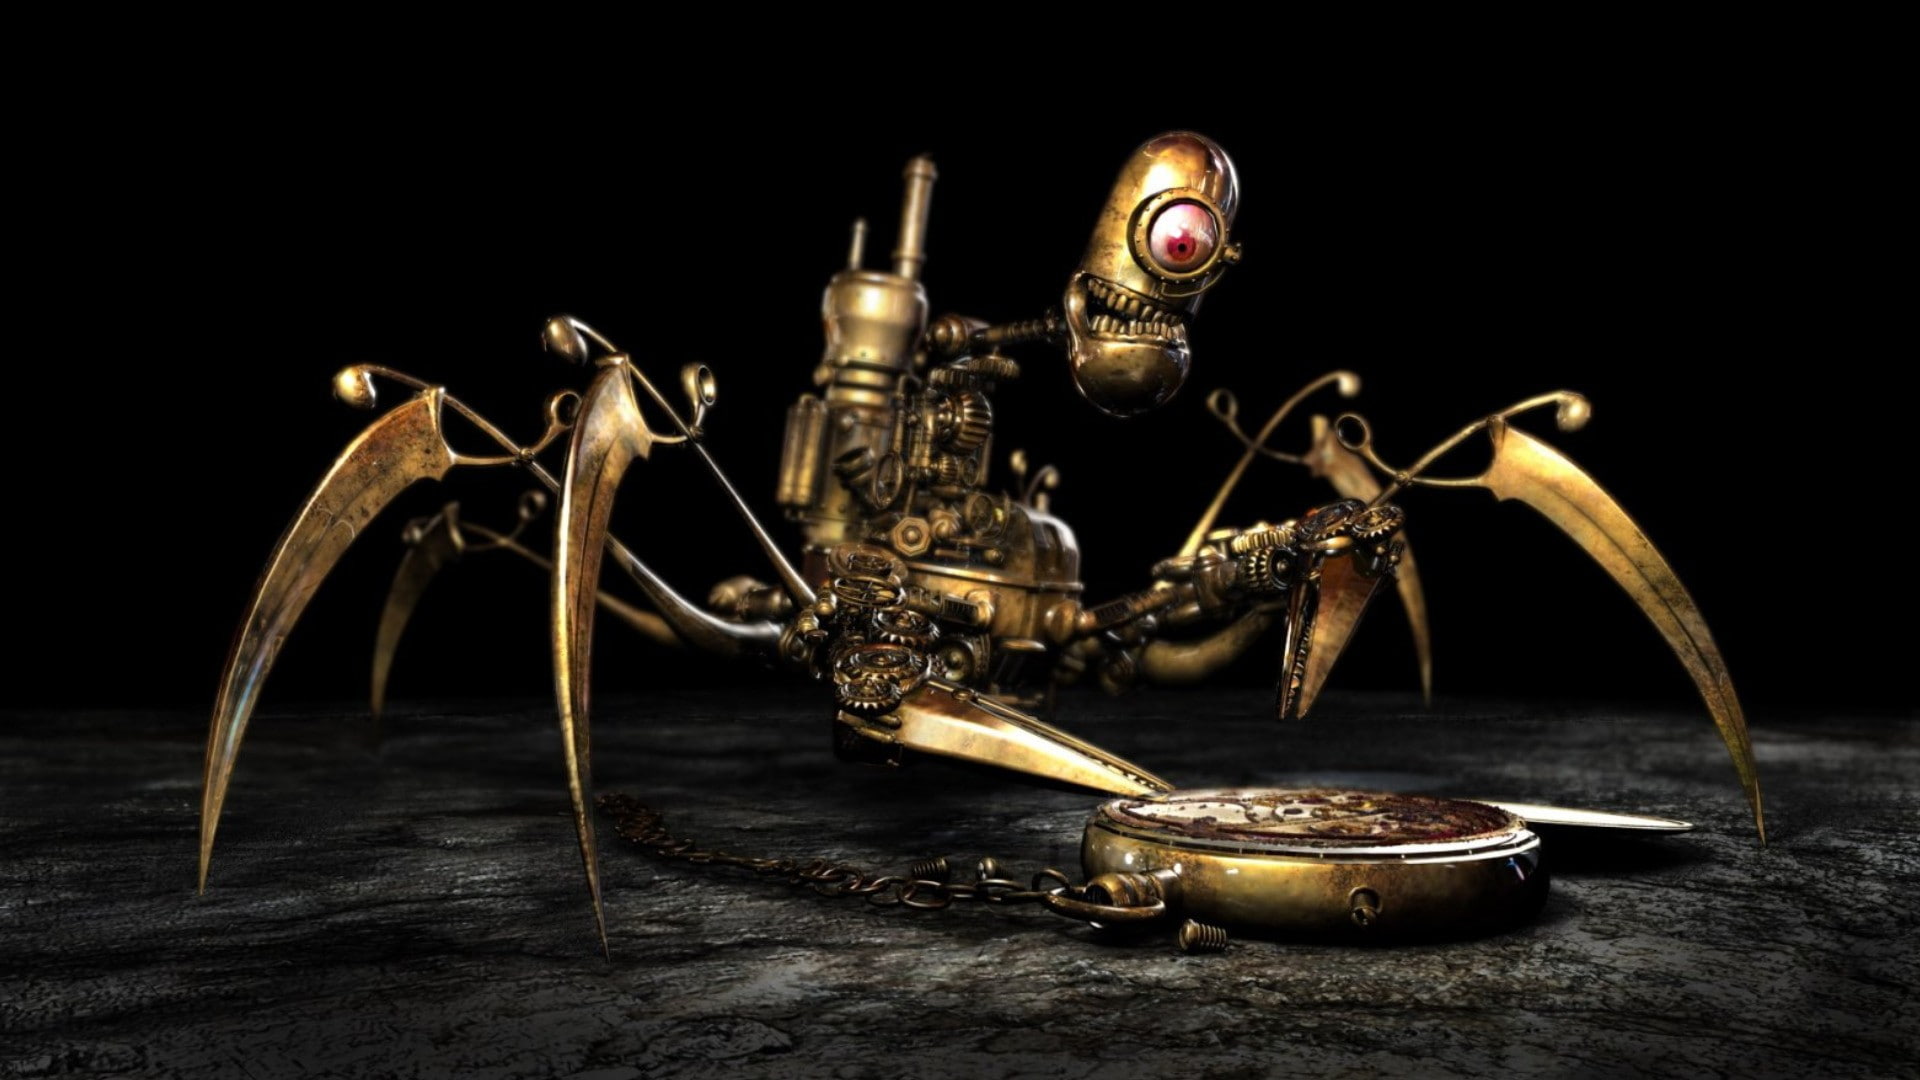 creepy robot gold steampunk pocketwatches, black background